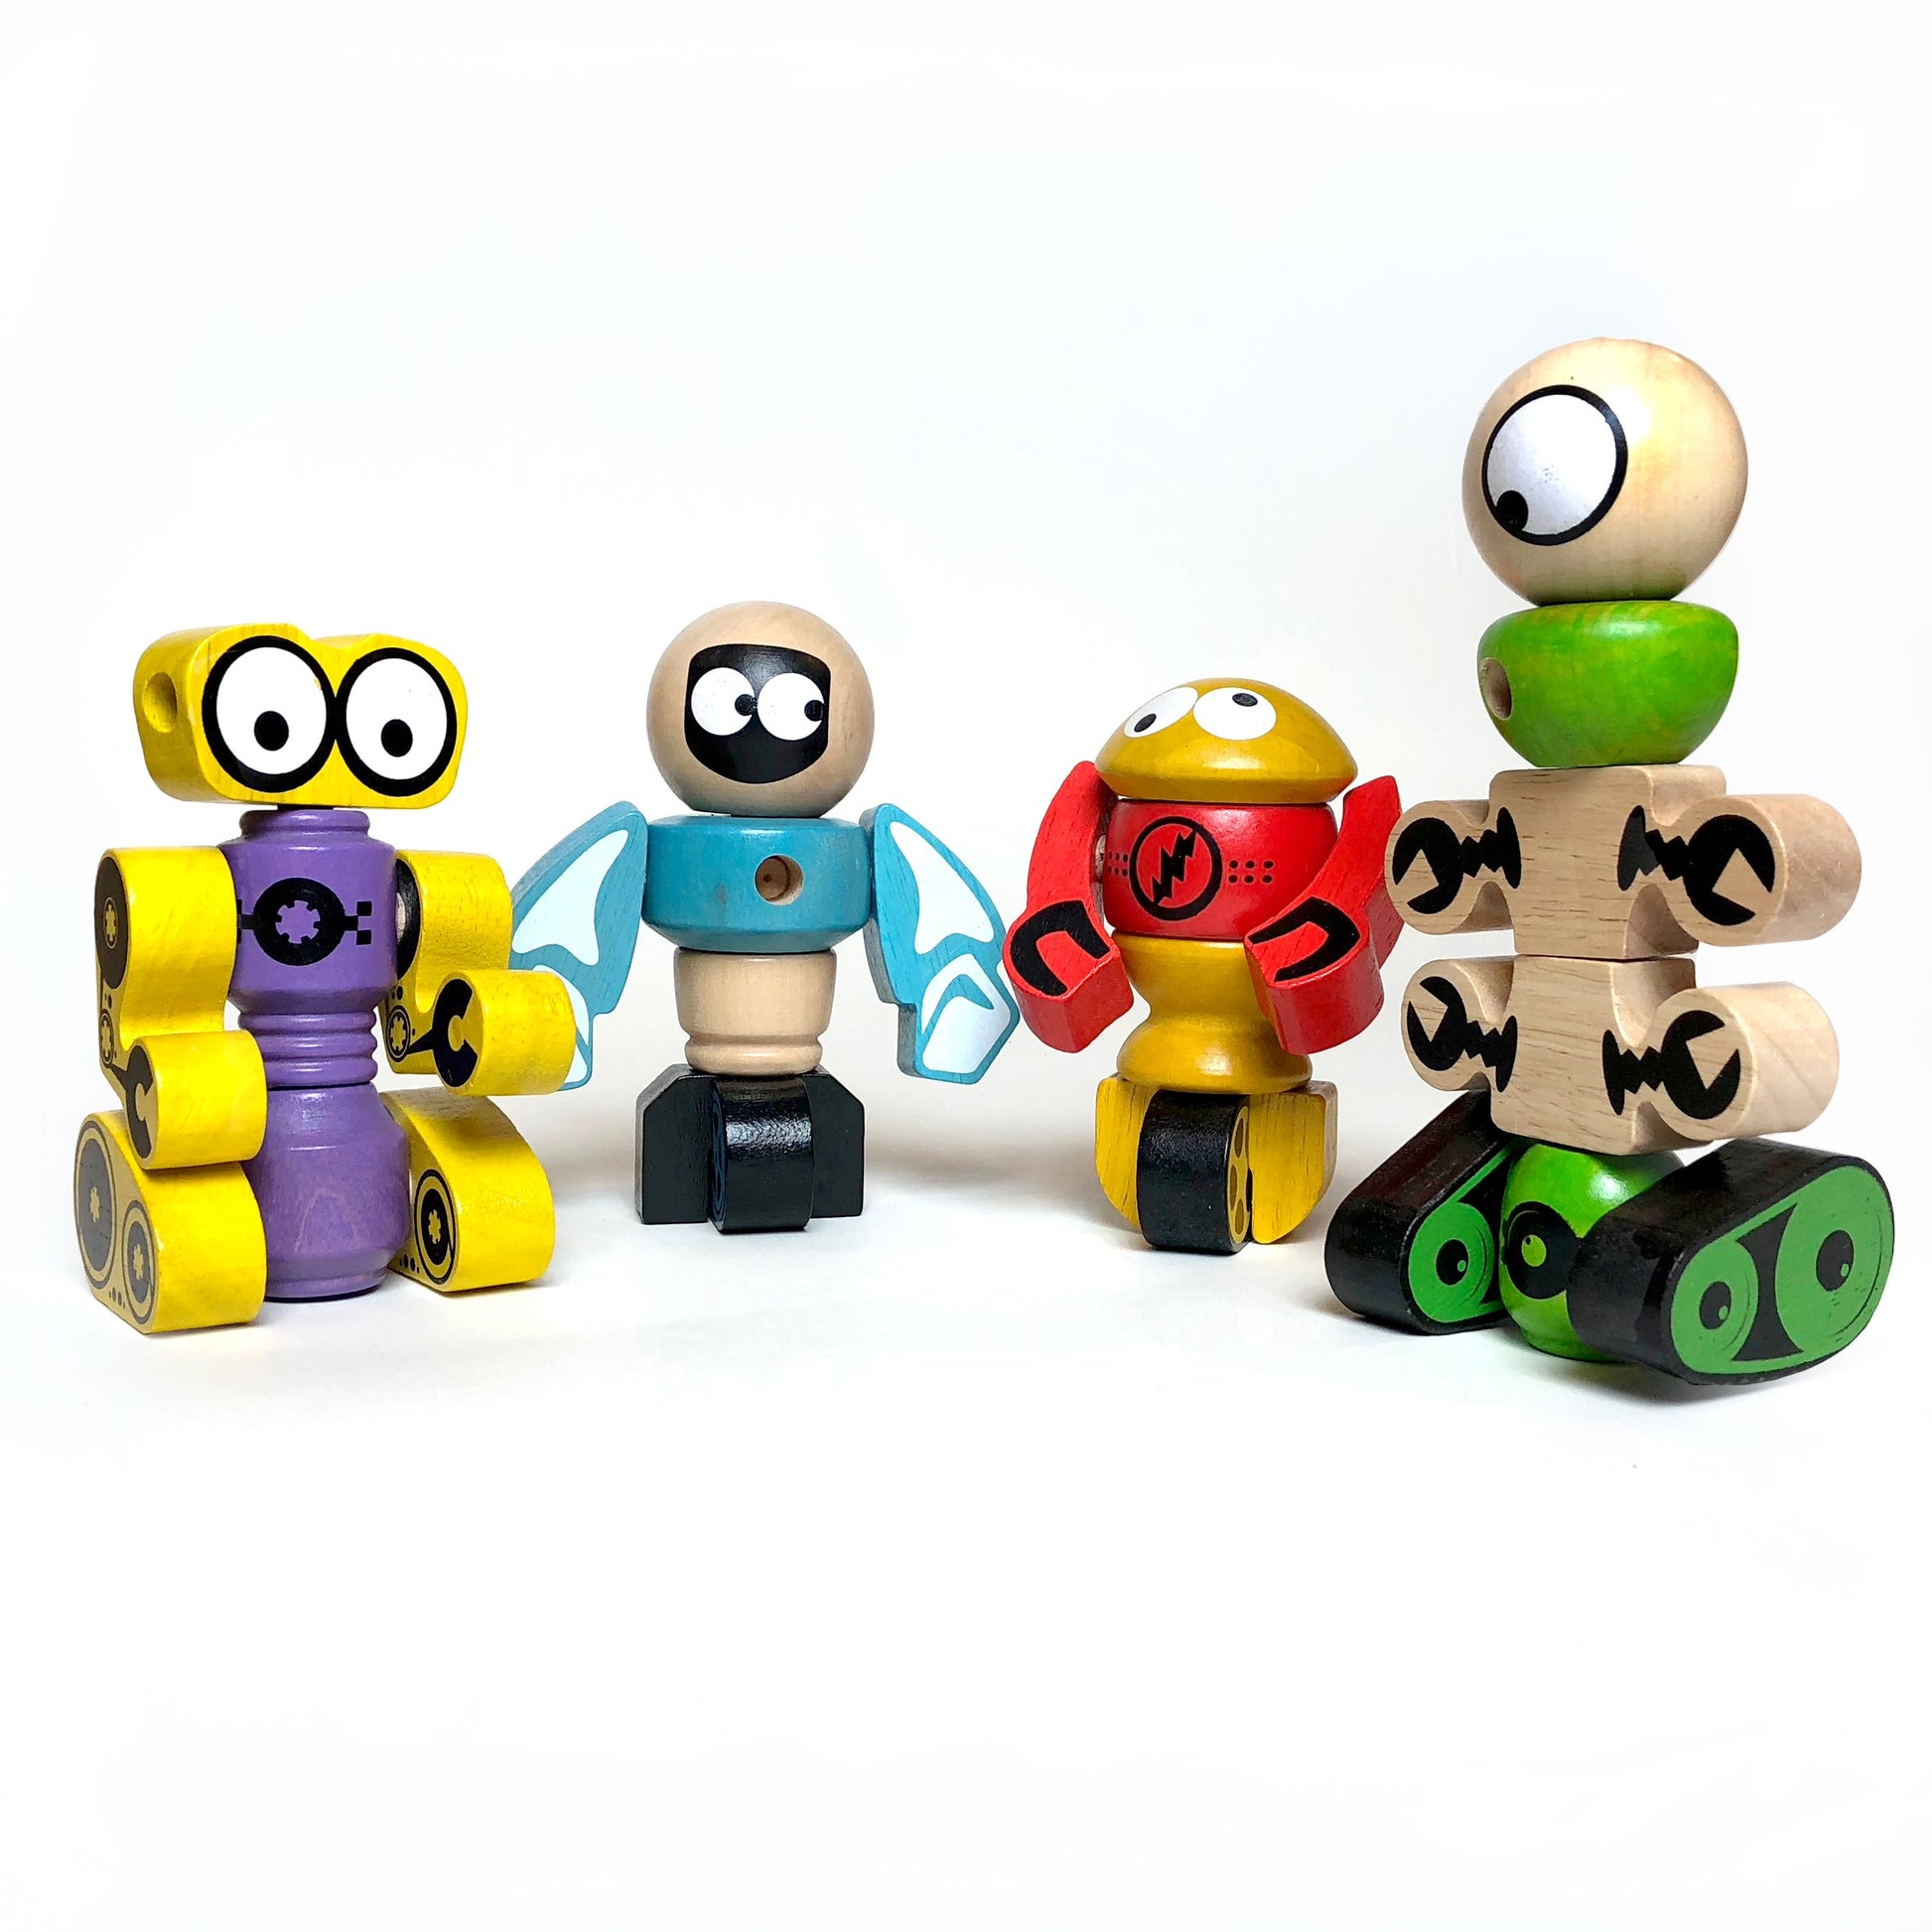 Tinker Totter Robots - Super Toy